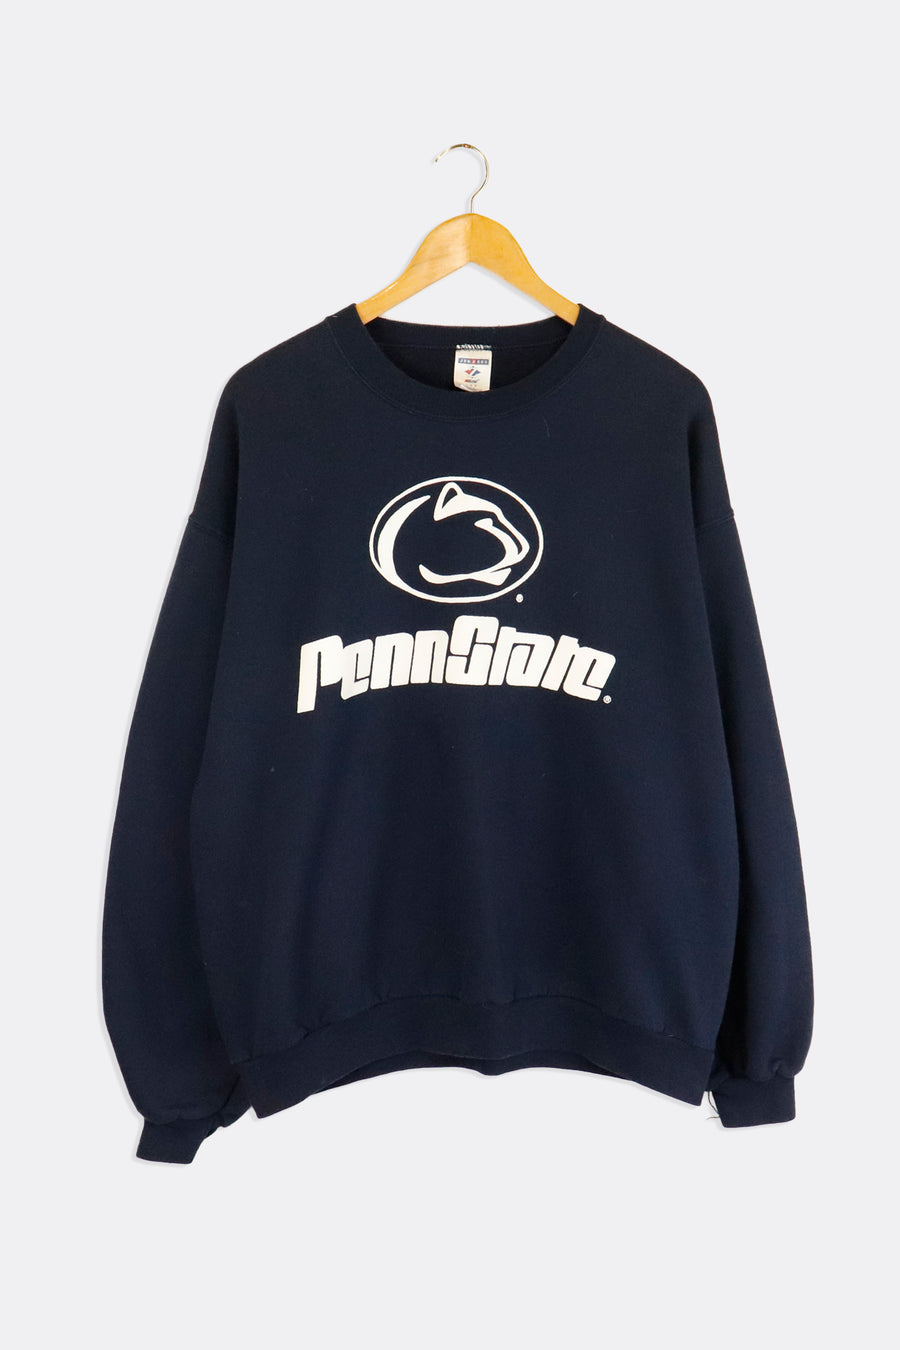 Vintage Penn State Large Filled Font Circle Logo Vinyl Sweatshirt Sz L